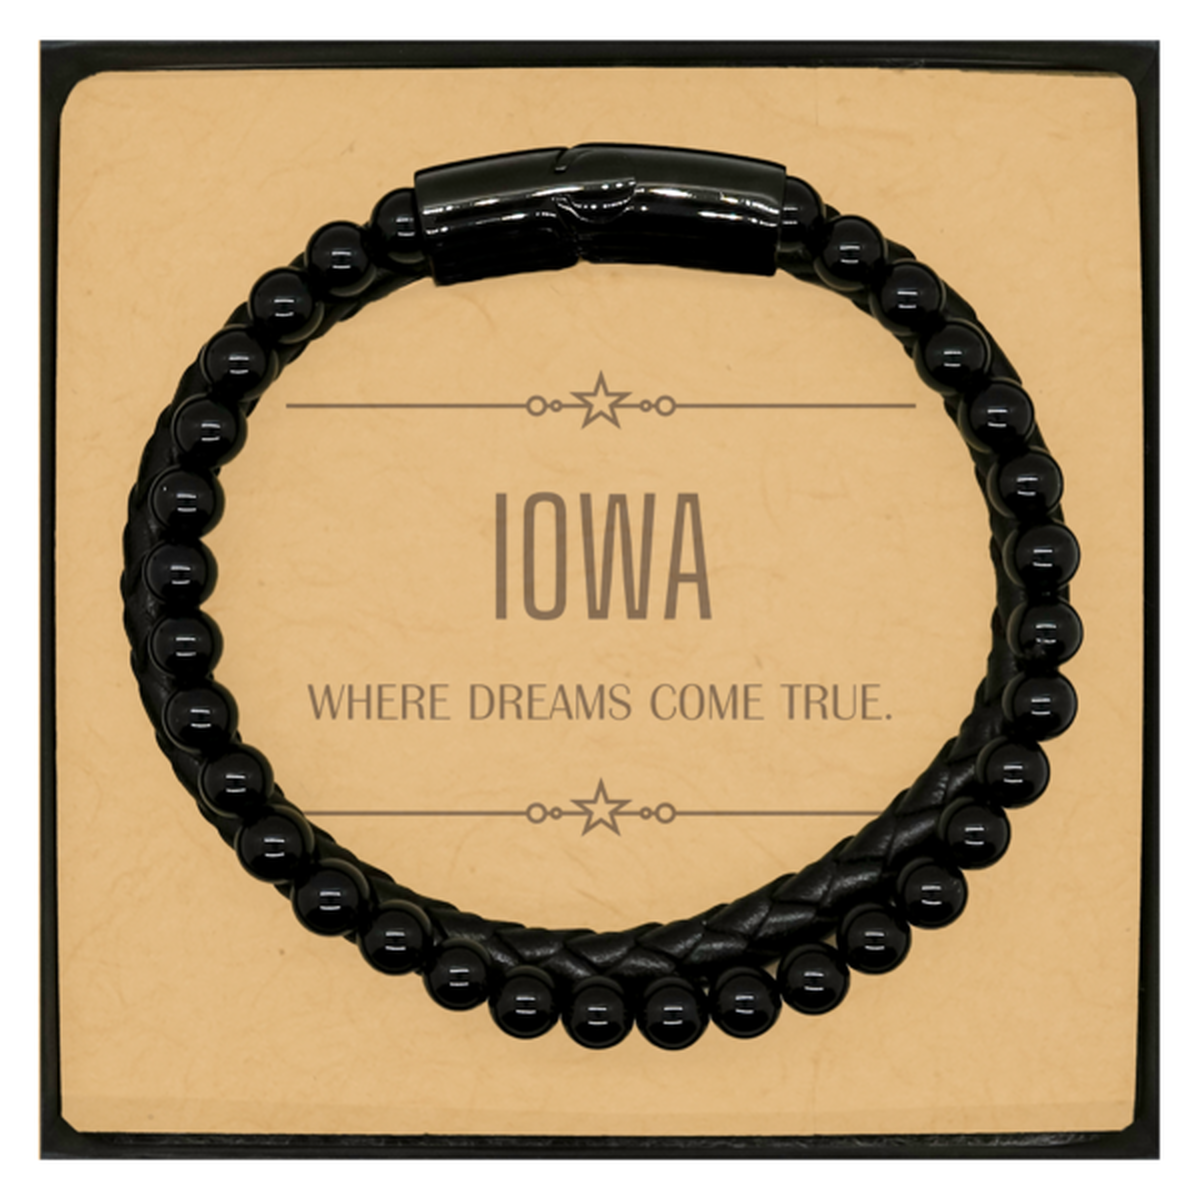 Love Iowa State Stone Leather Bracelets, Iowa Where dreams come true, Birthday Christmas Inspirational Gifts For Iowa Men, Women, Friends